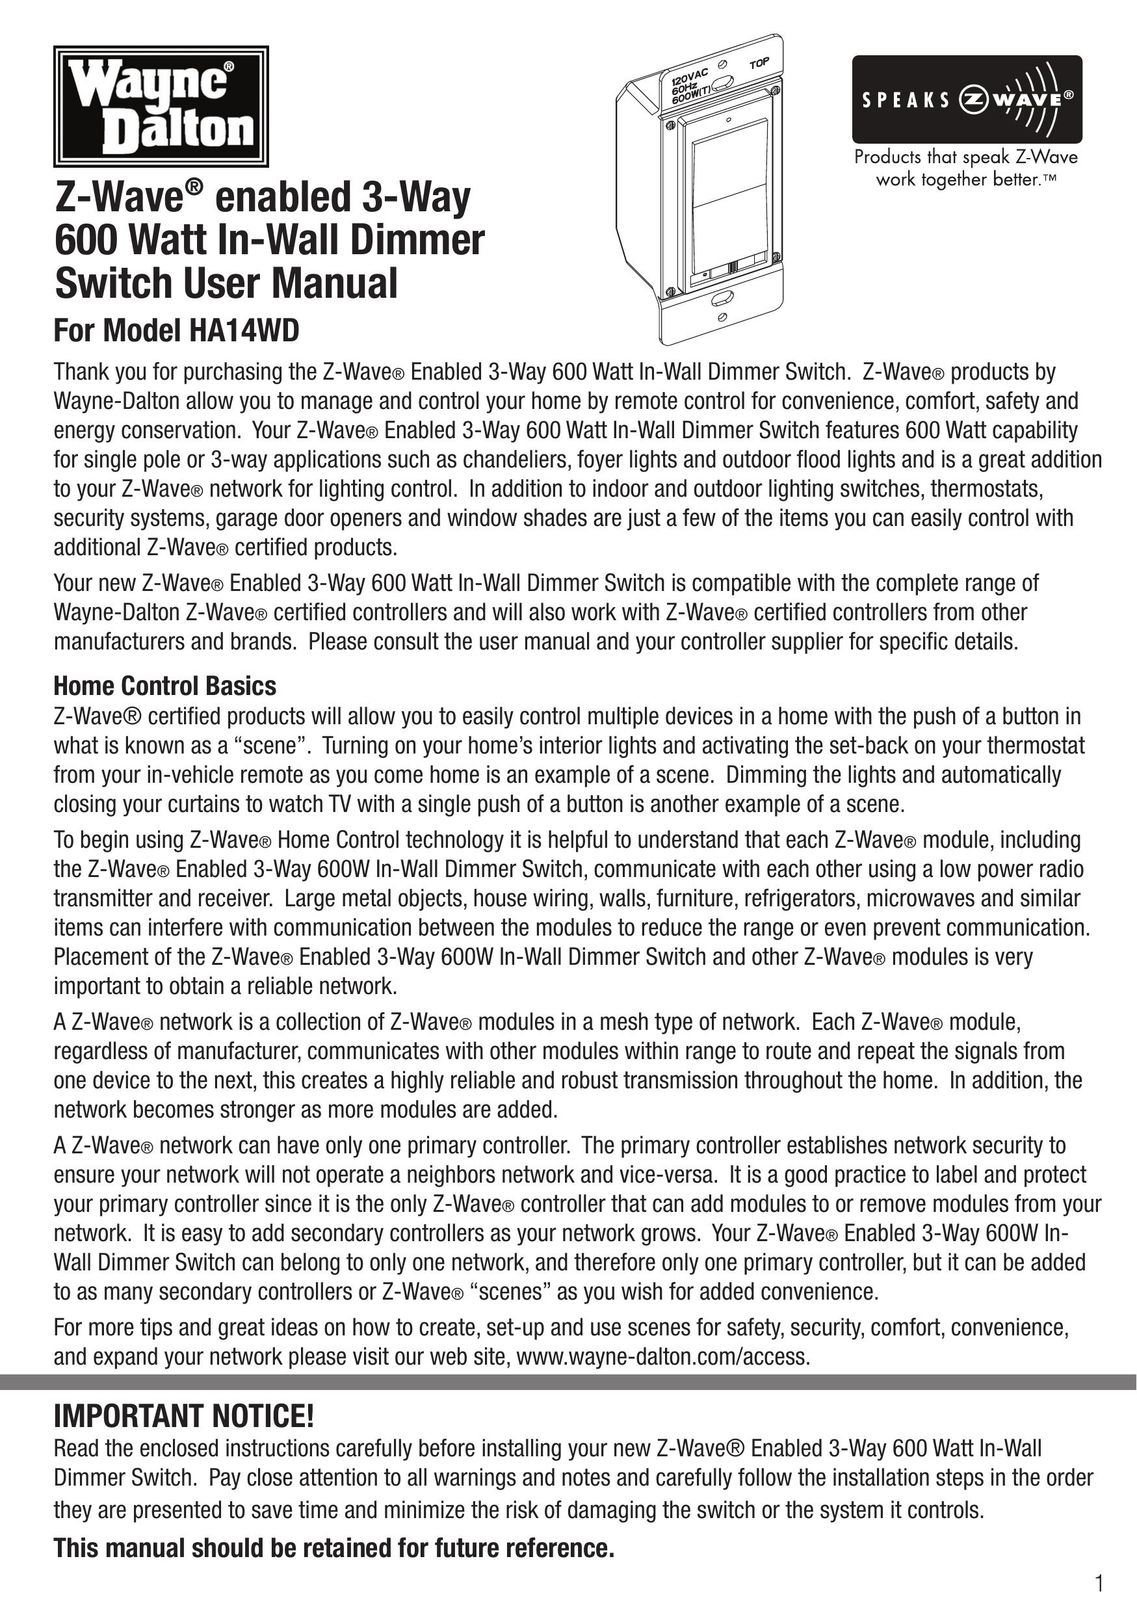 Wayne-Dalton HA14WD Switch User Manual